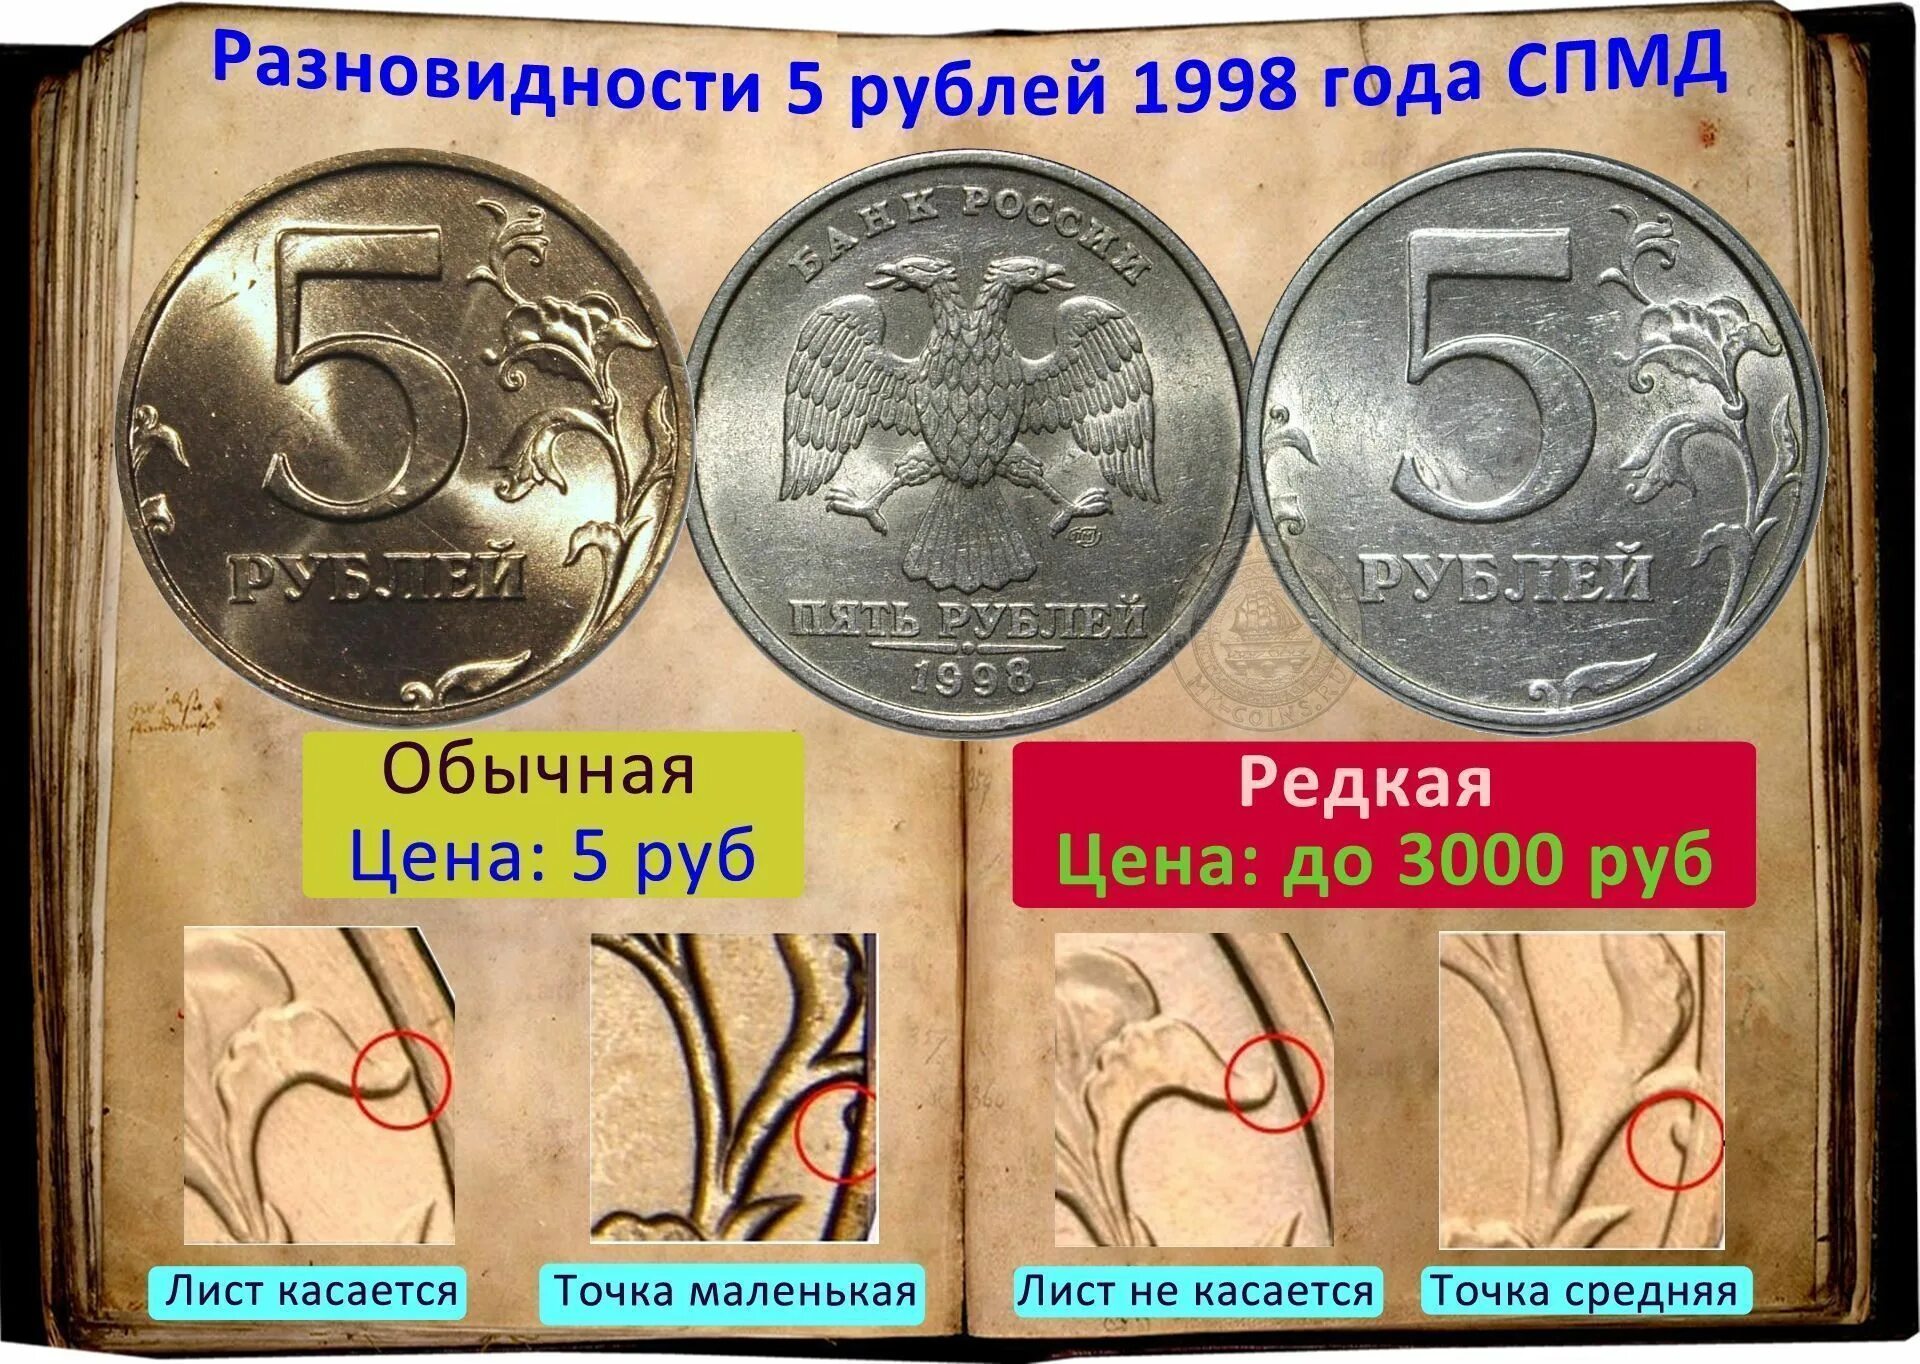 Редкая монета 5 рублей 1998 года СПМД. Монеты СПМД 1998 год 5 рублей. Монета 5 рублей 1998 СПМД. Редкая монета 5 рублей 1998. 5 и 5 сегодня купить